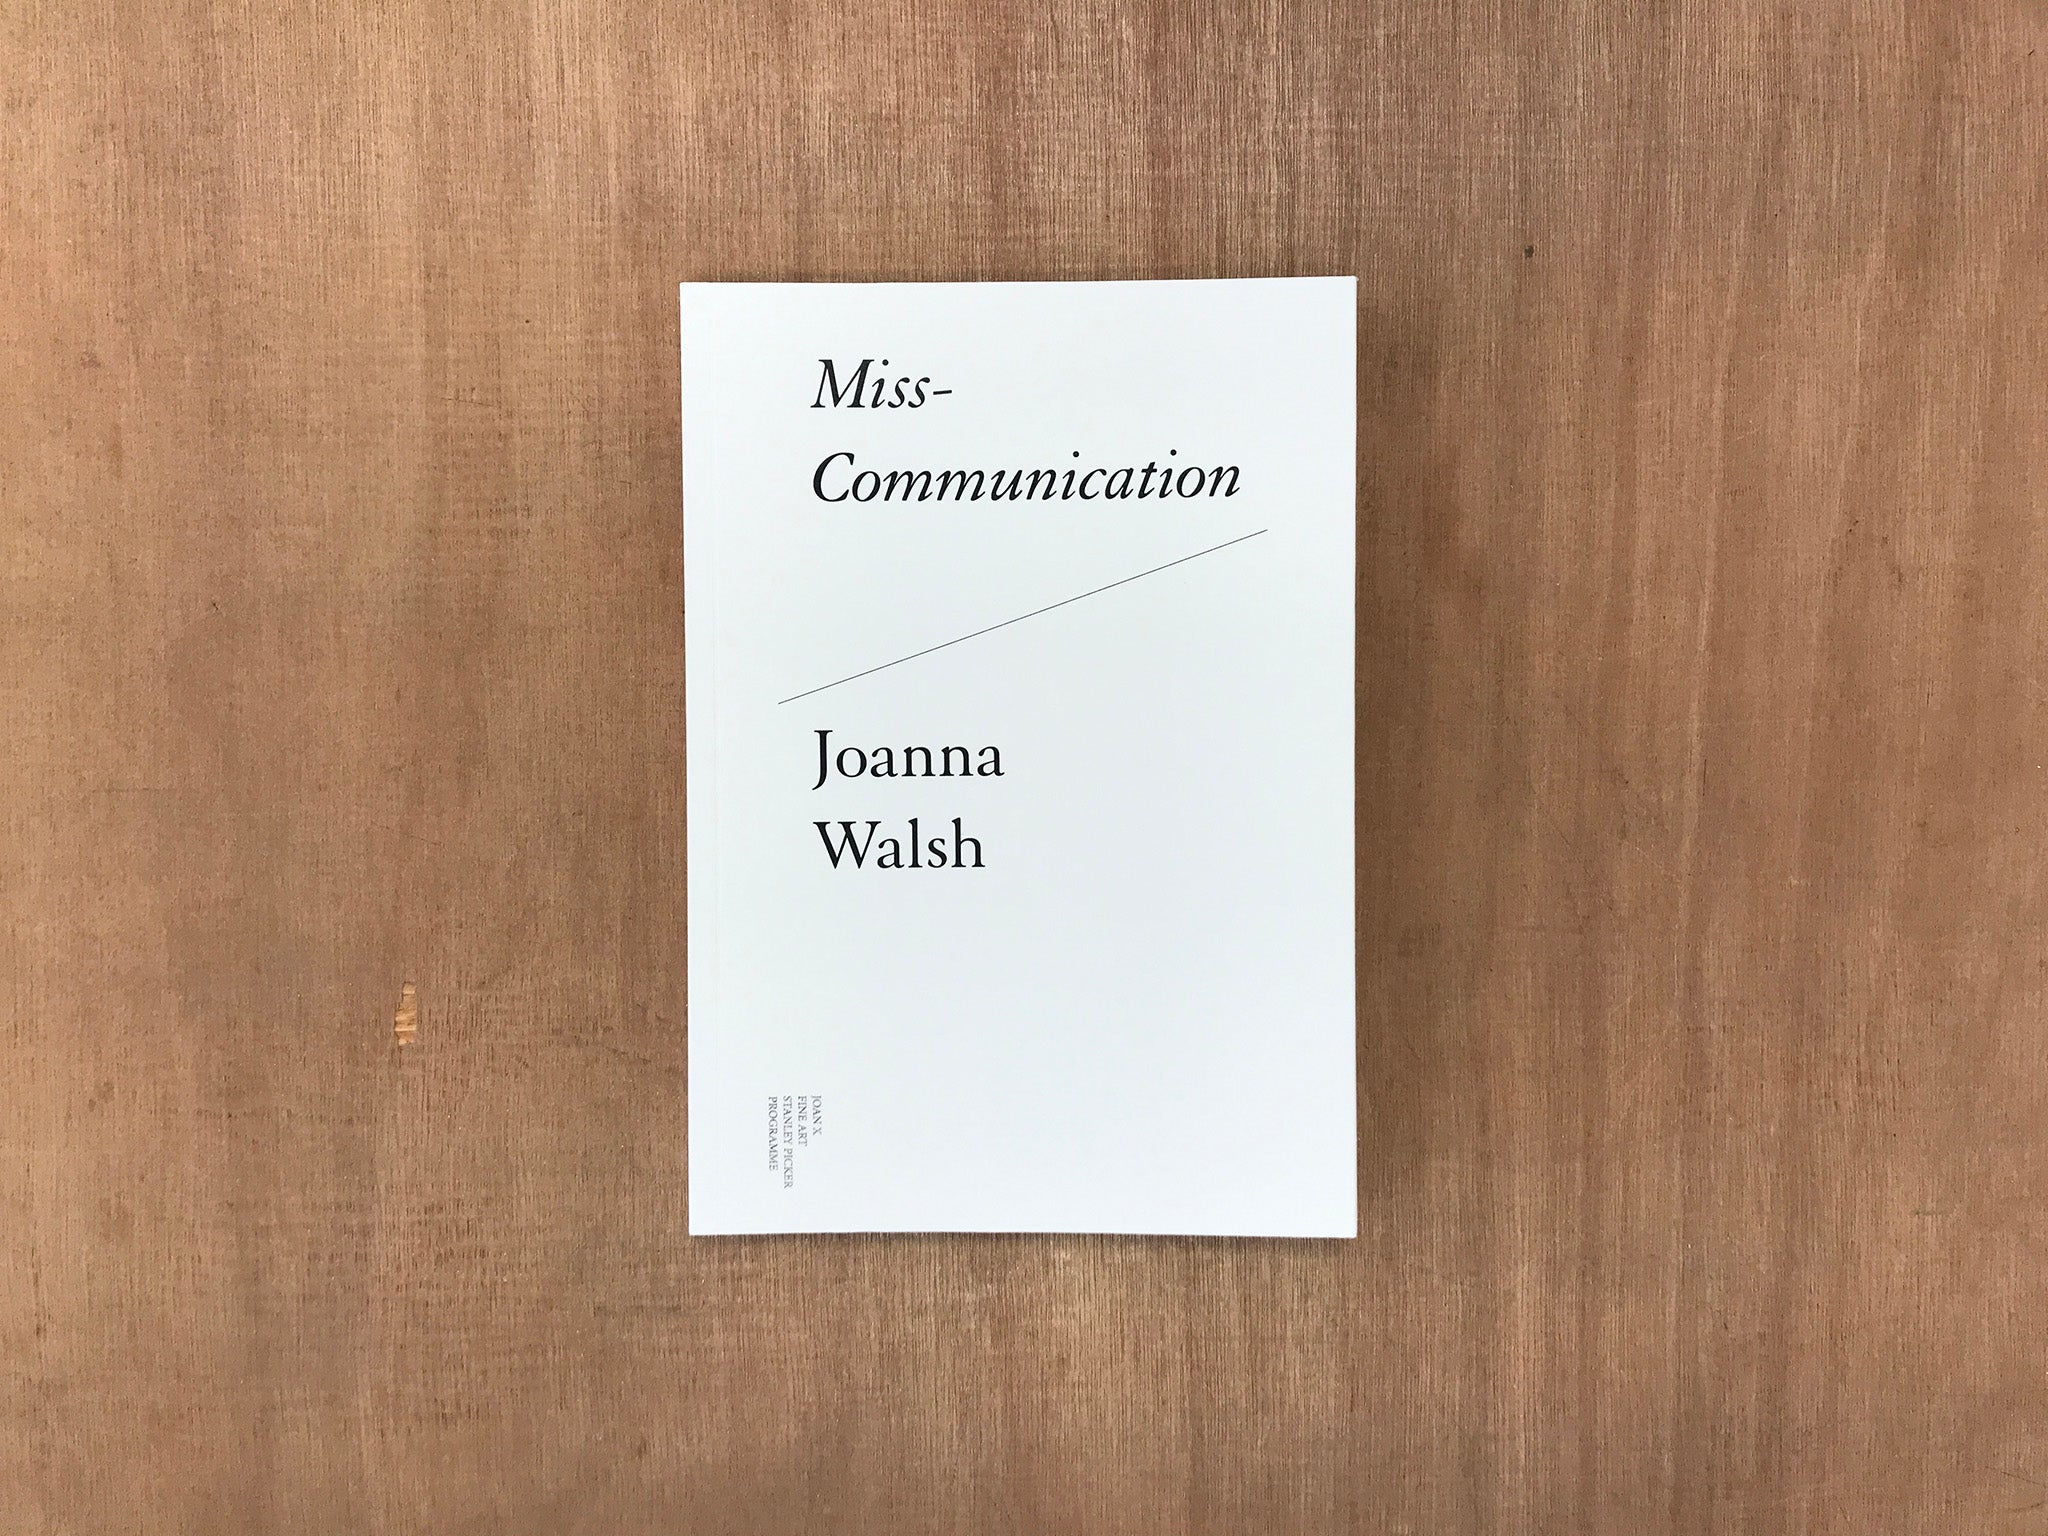 MISS-COMMUNICATION by Joanna Walsh